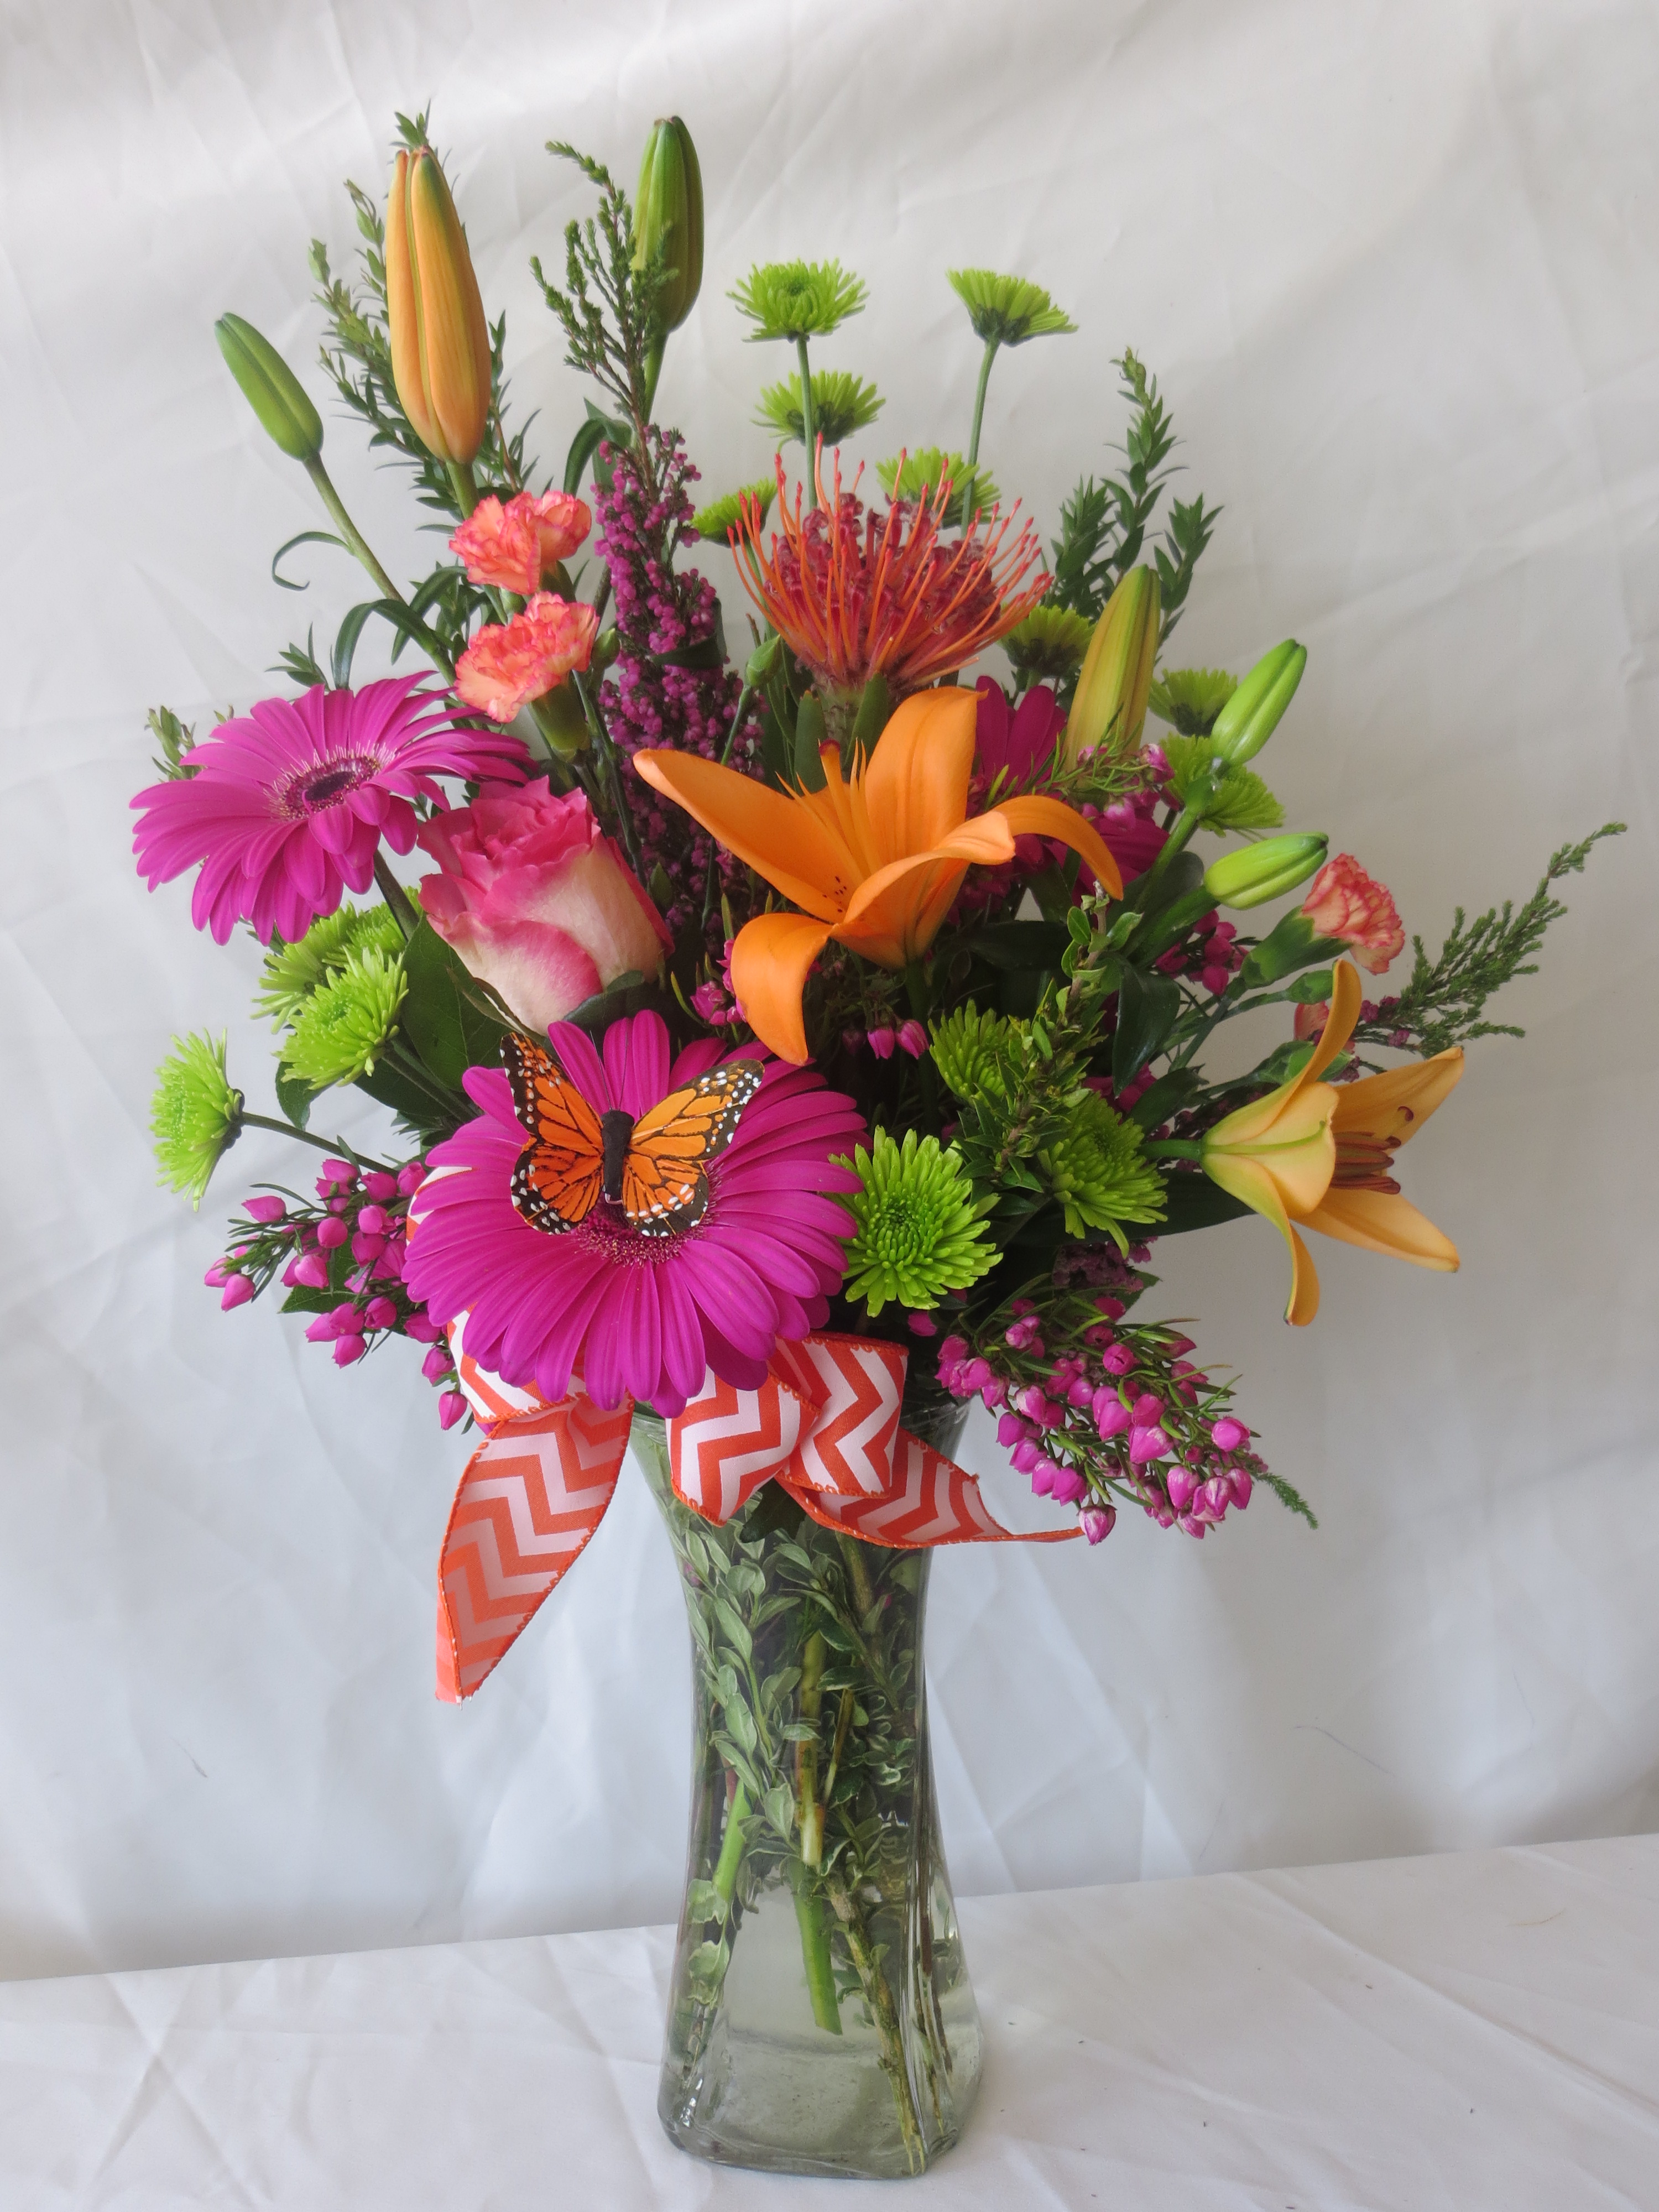 friendswood flowers shop florist texas tx delivery